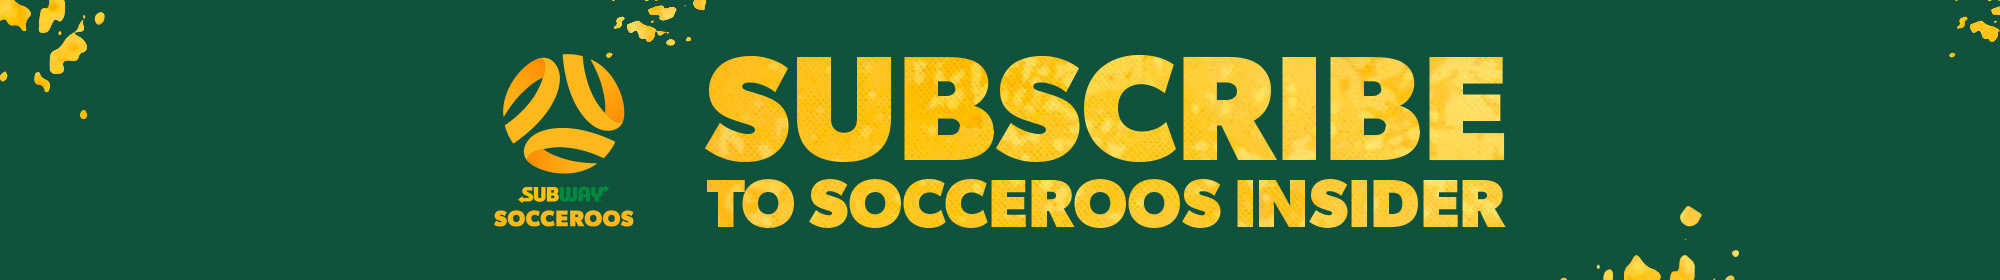 Socceroos Insider banner